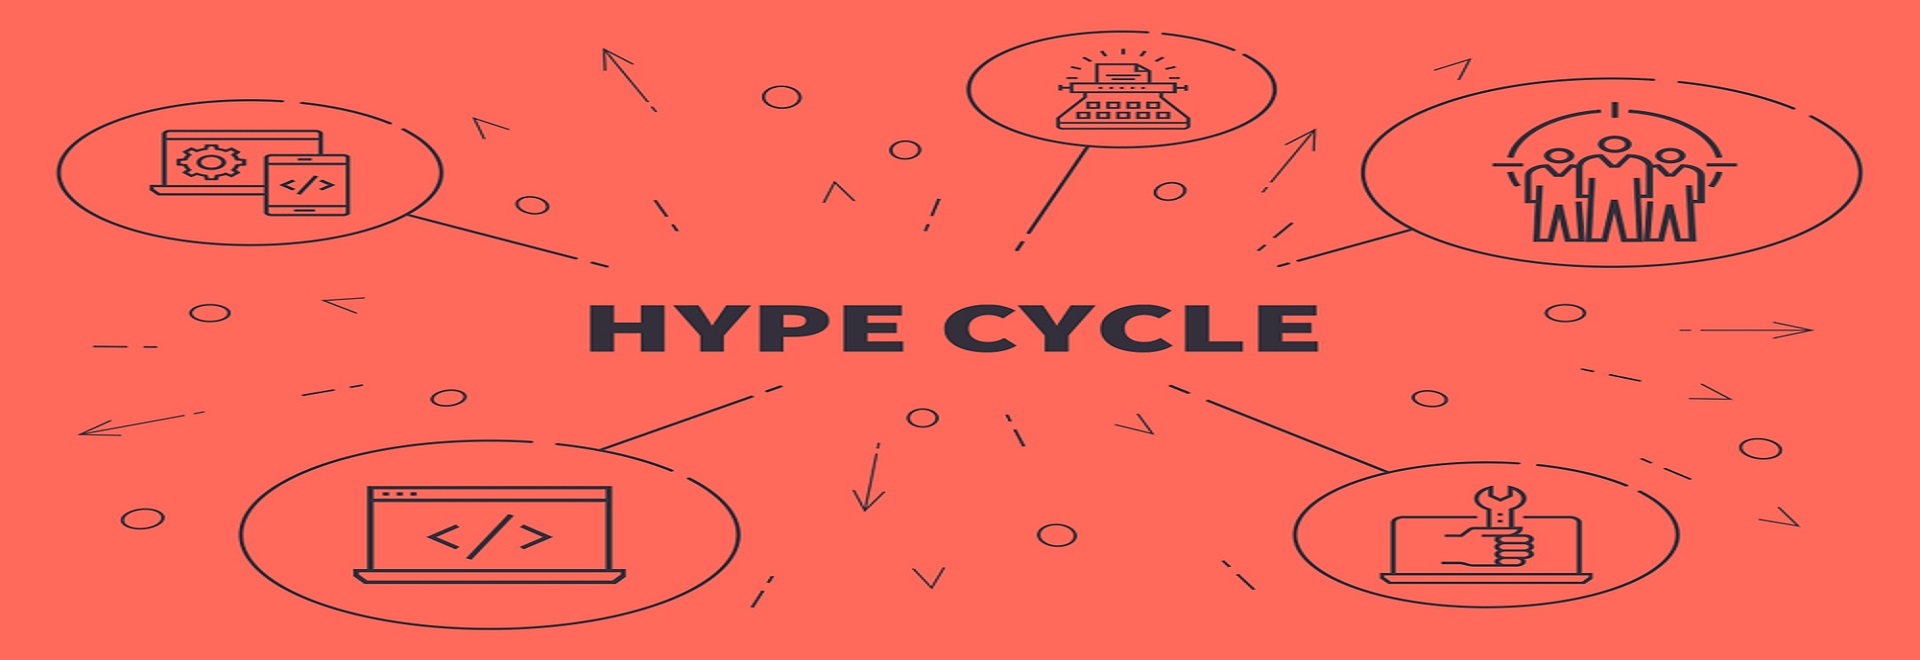 hype cycle shutterstock OpturaDesign - صفحه اصلی